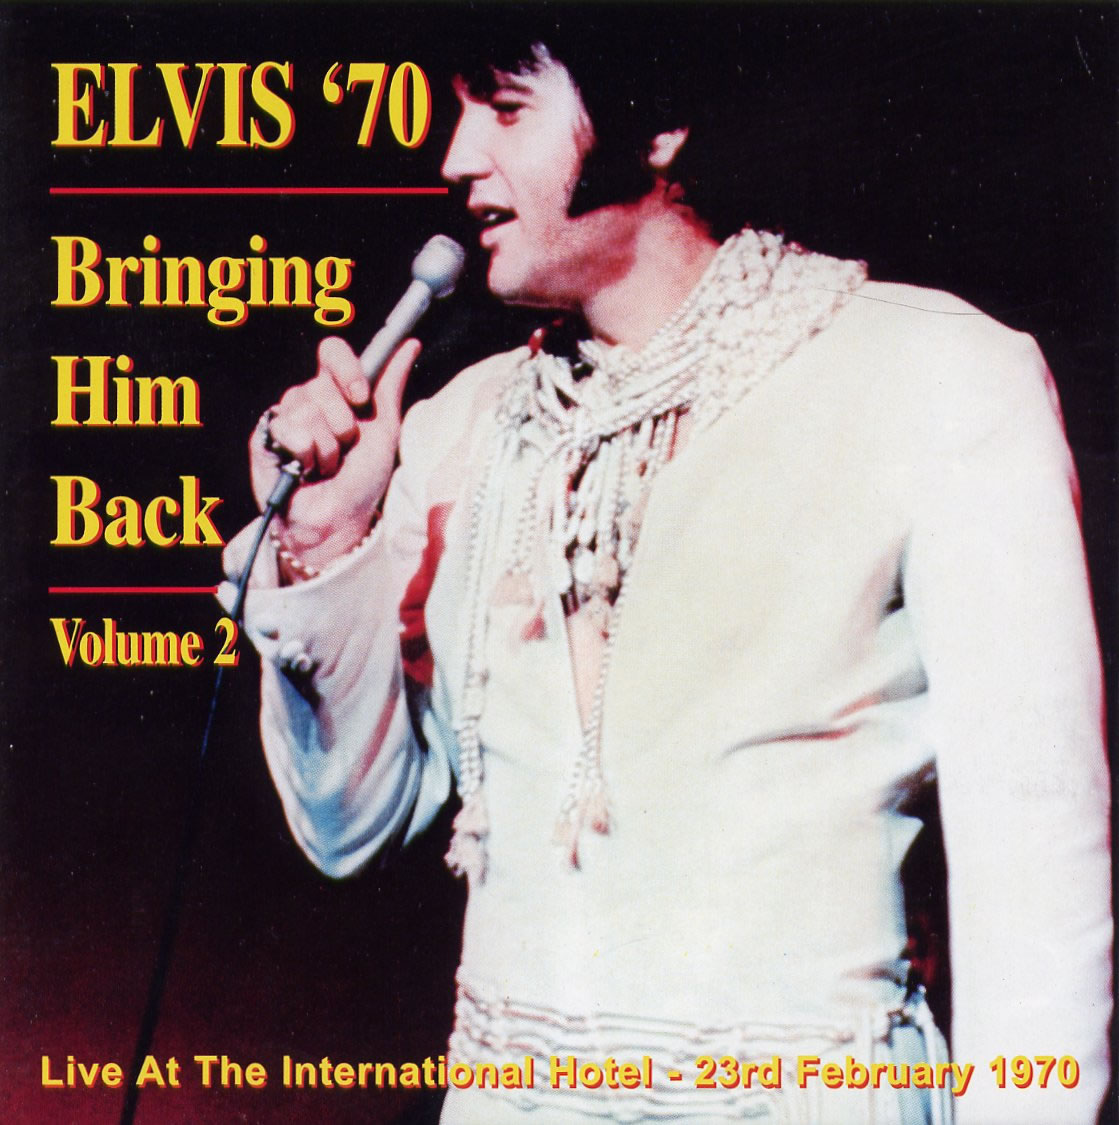 Elvis Presley - 1970-02-23 CS, Elvis '70-Bringing Him Back, Vol. 2 [Audifon 002]